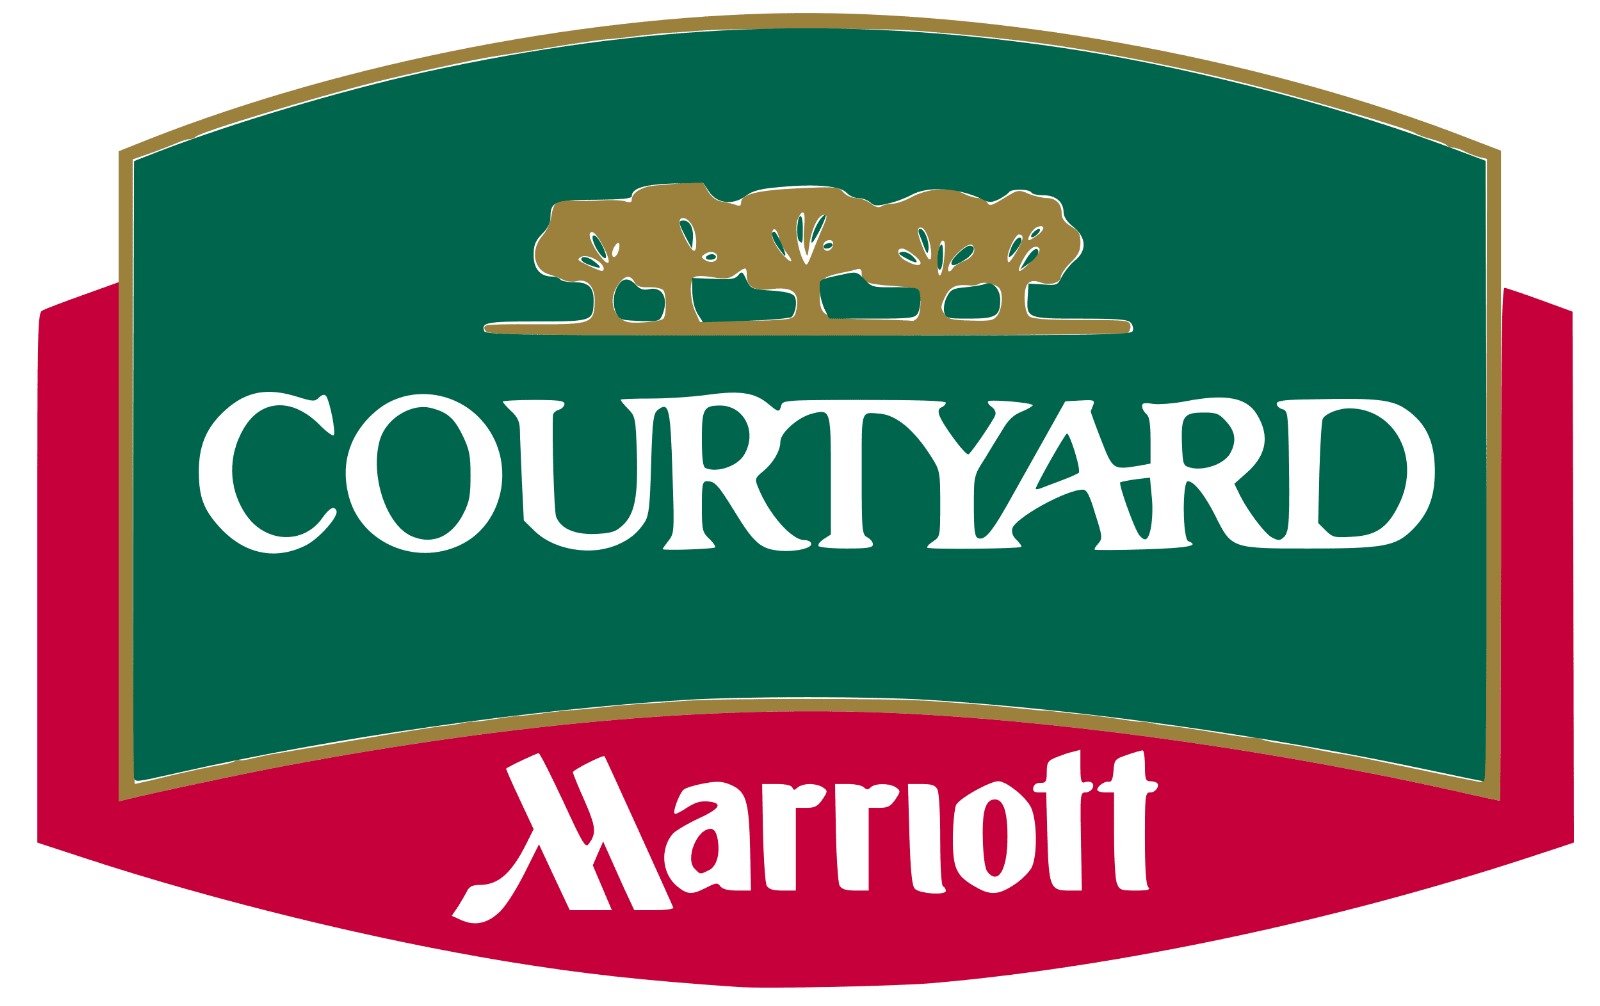 Courtyard Marriott Hotel